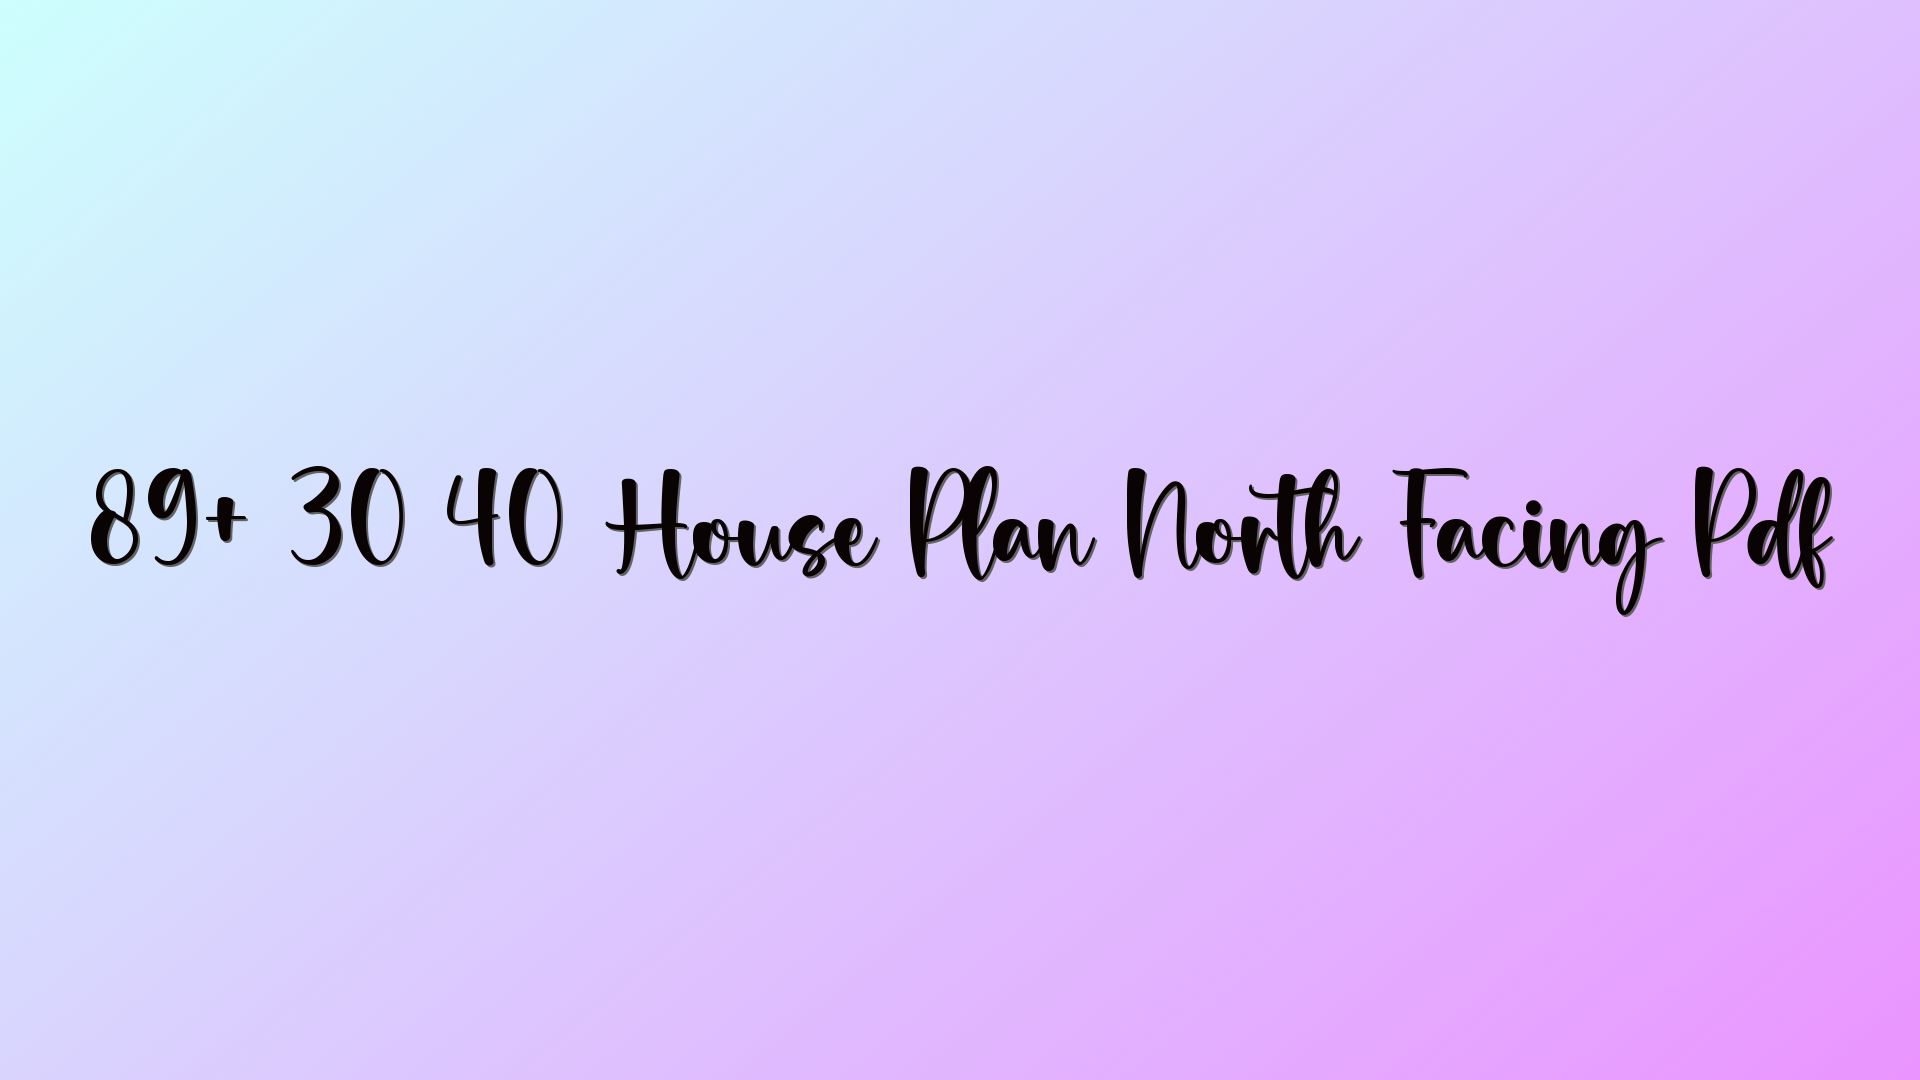 89+ 30 40 House Plan North Facing Pdf